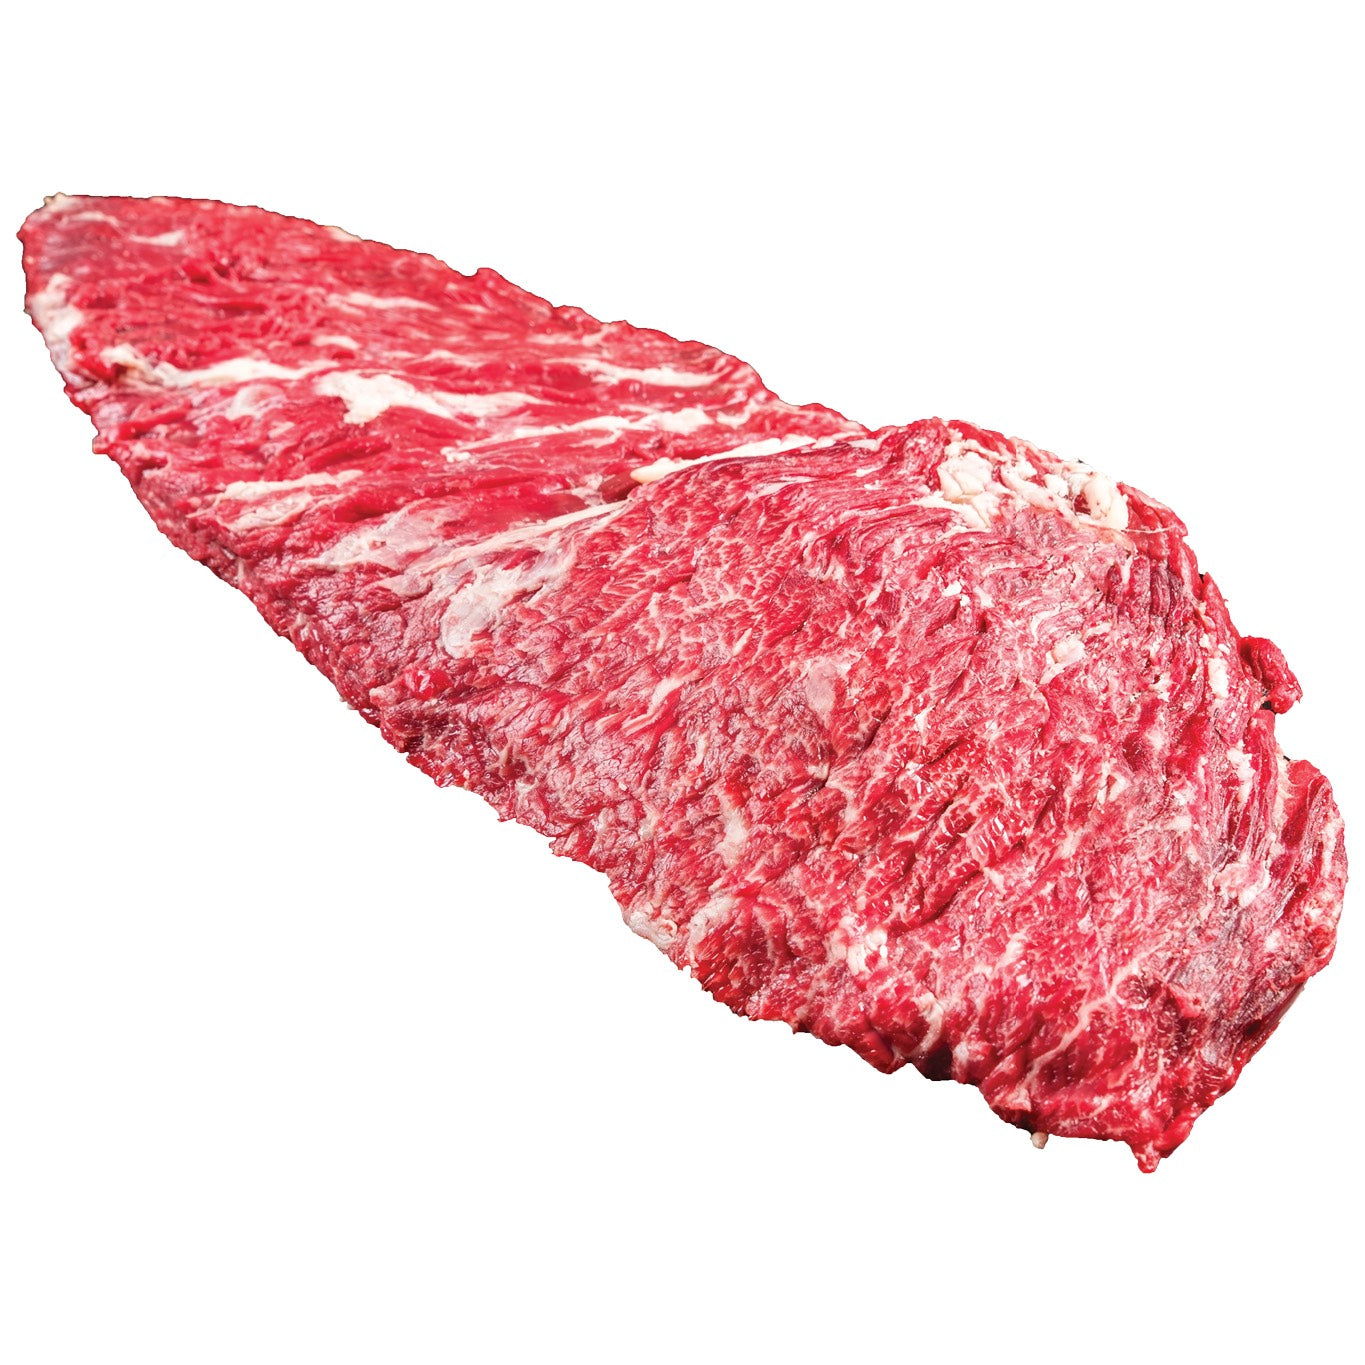 Marinated Beef Flap Steak